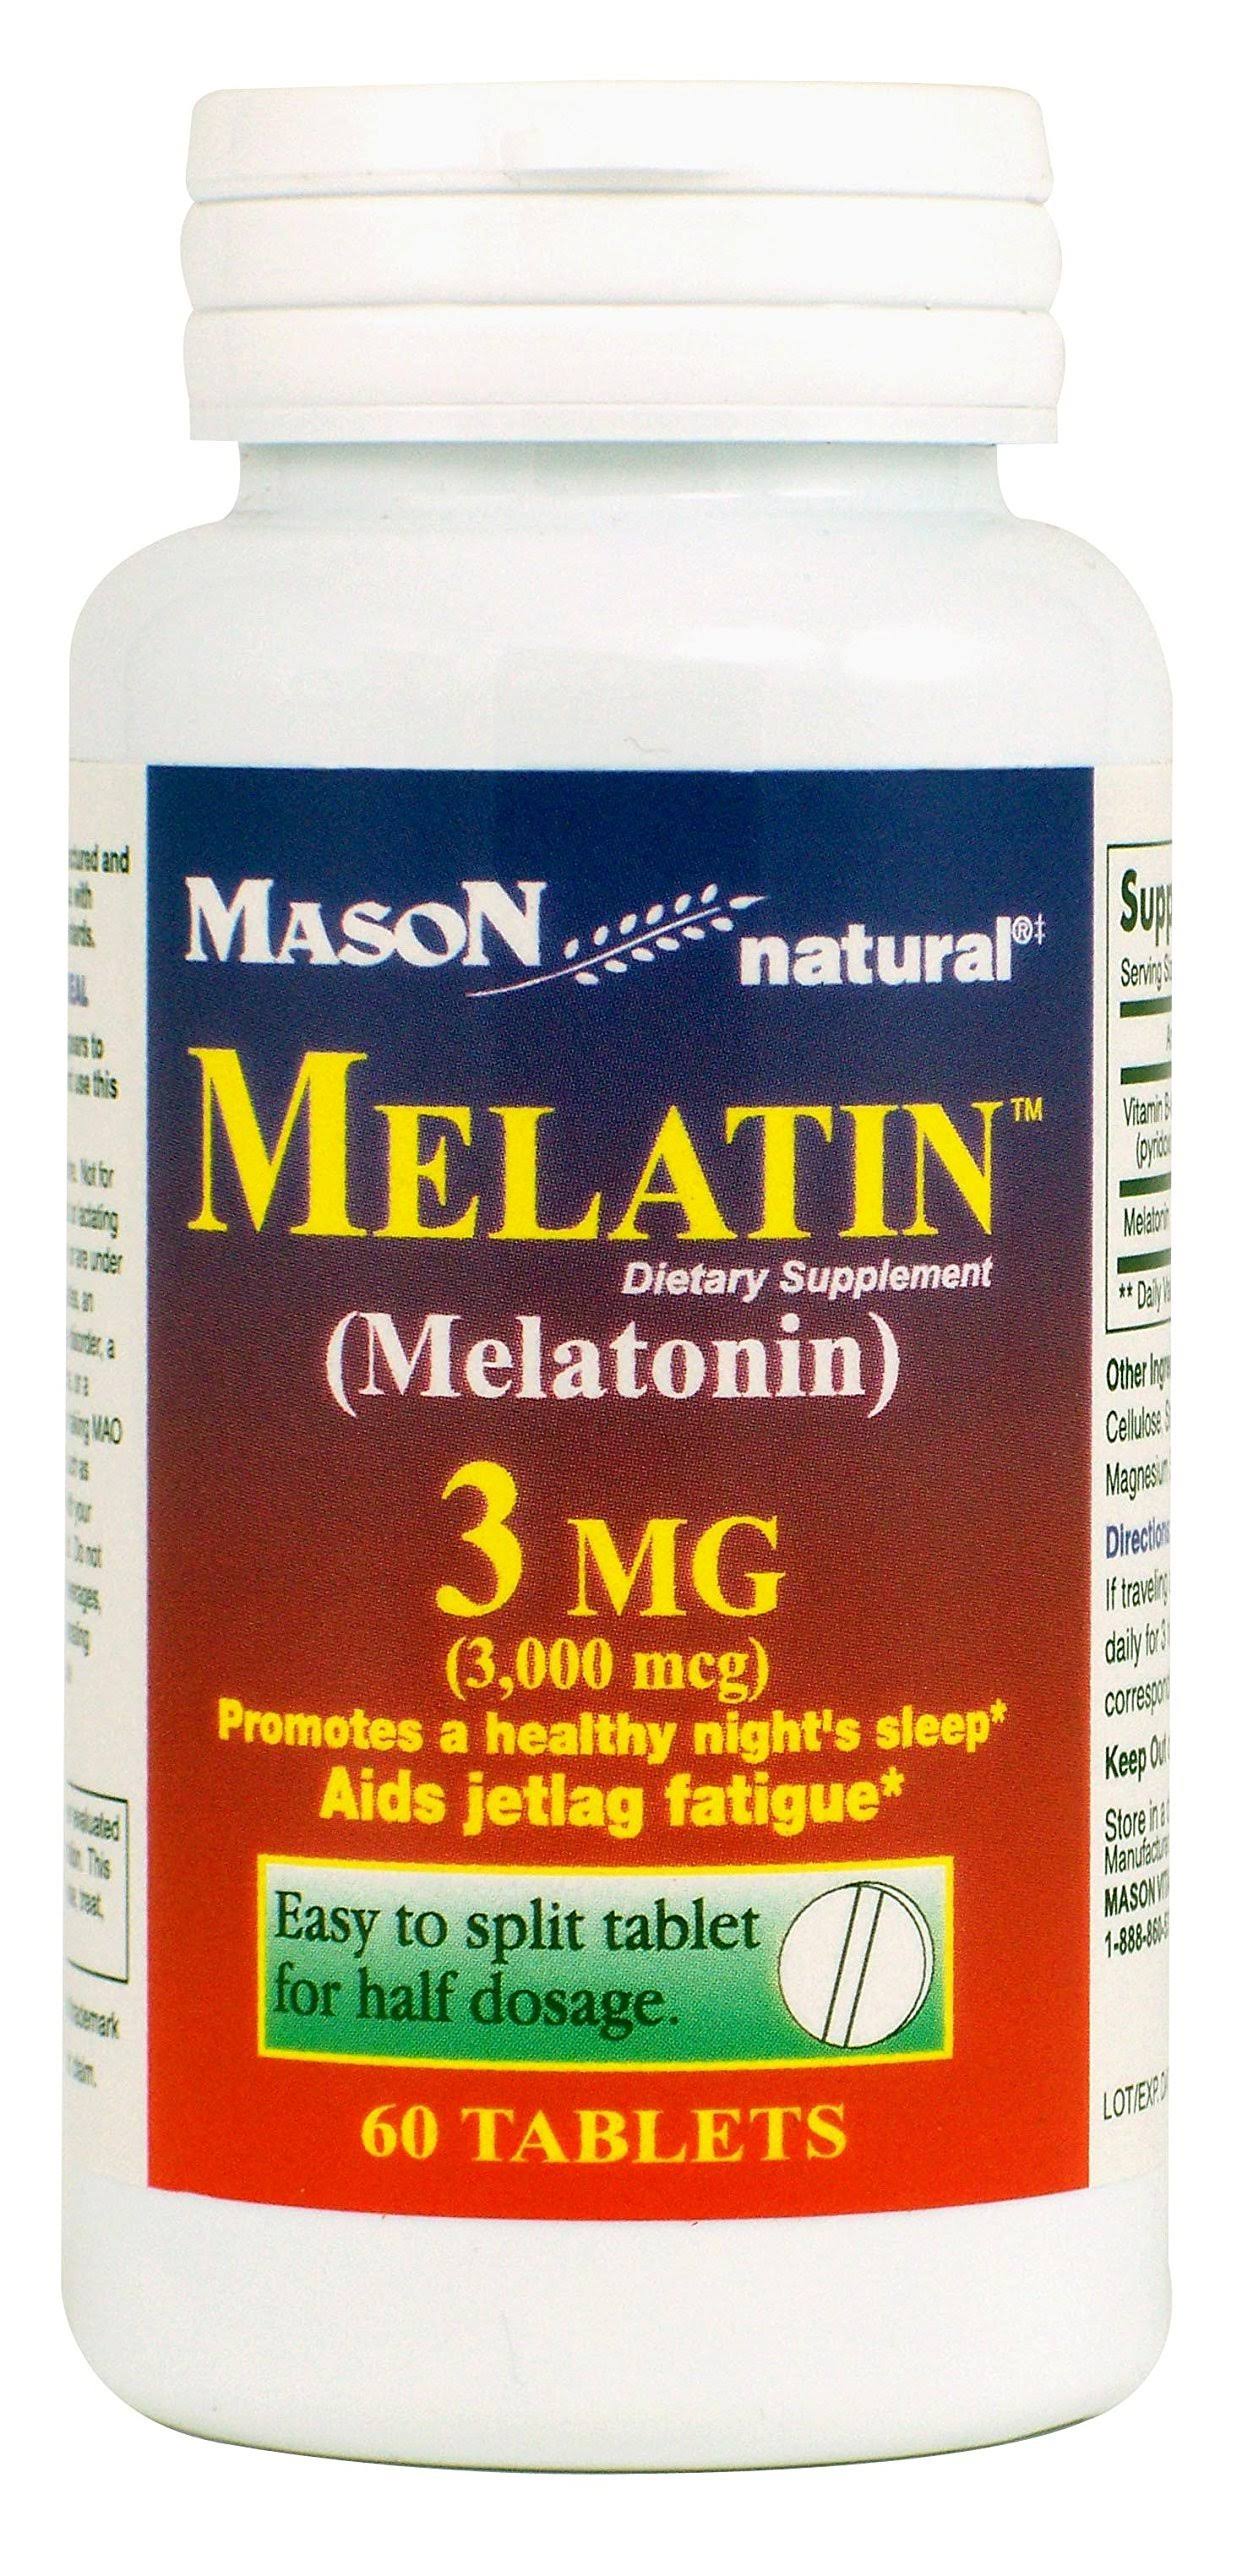 Mason Natural Melatin Melatonin Dietary Supplement - 60 Tablets